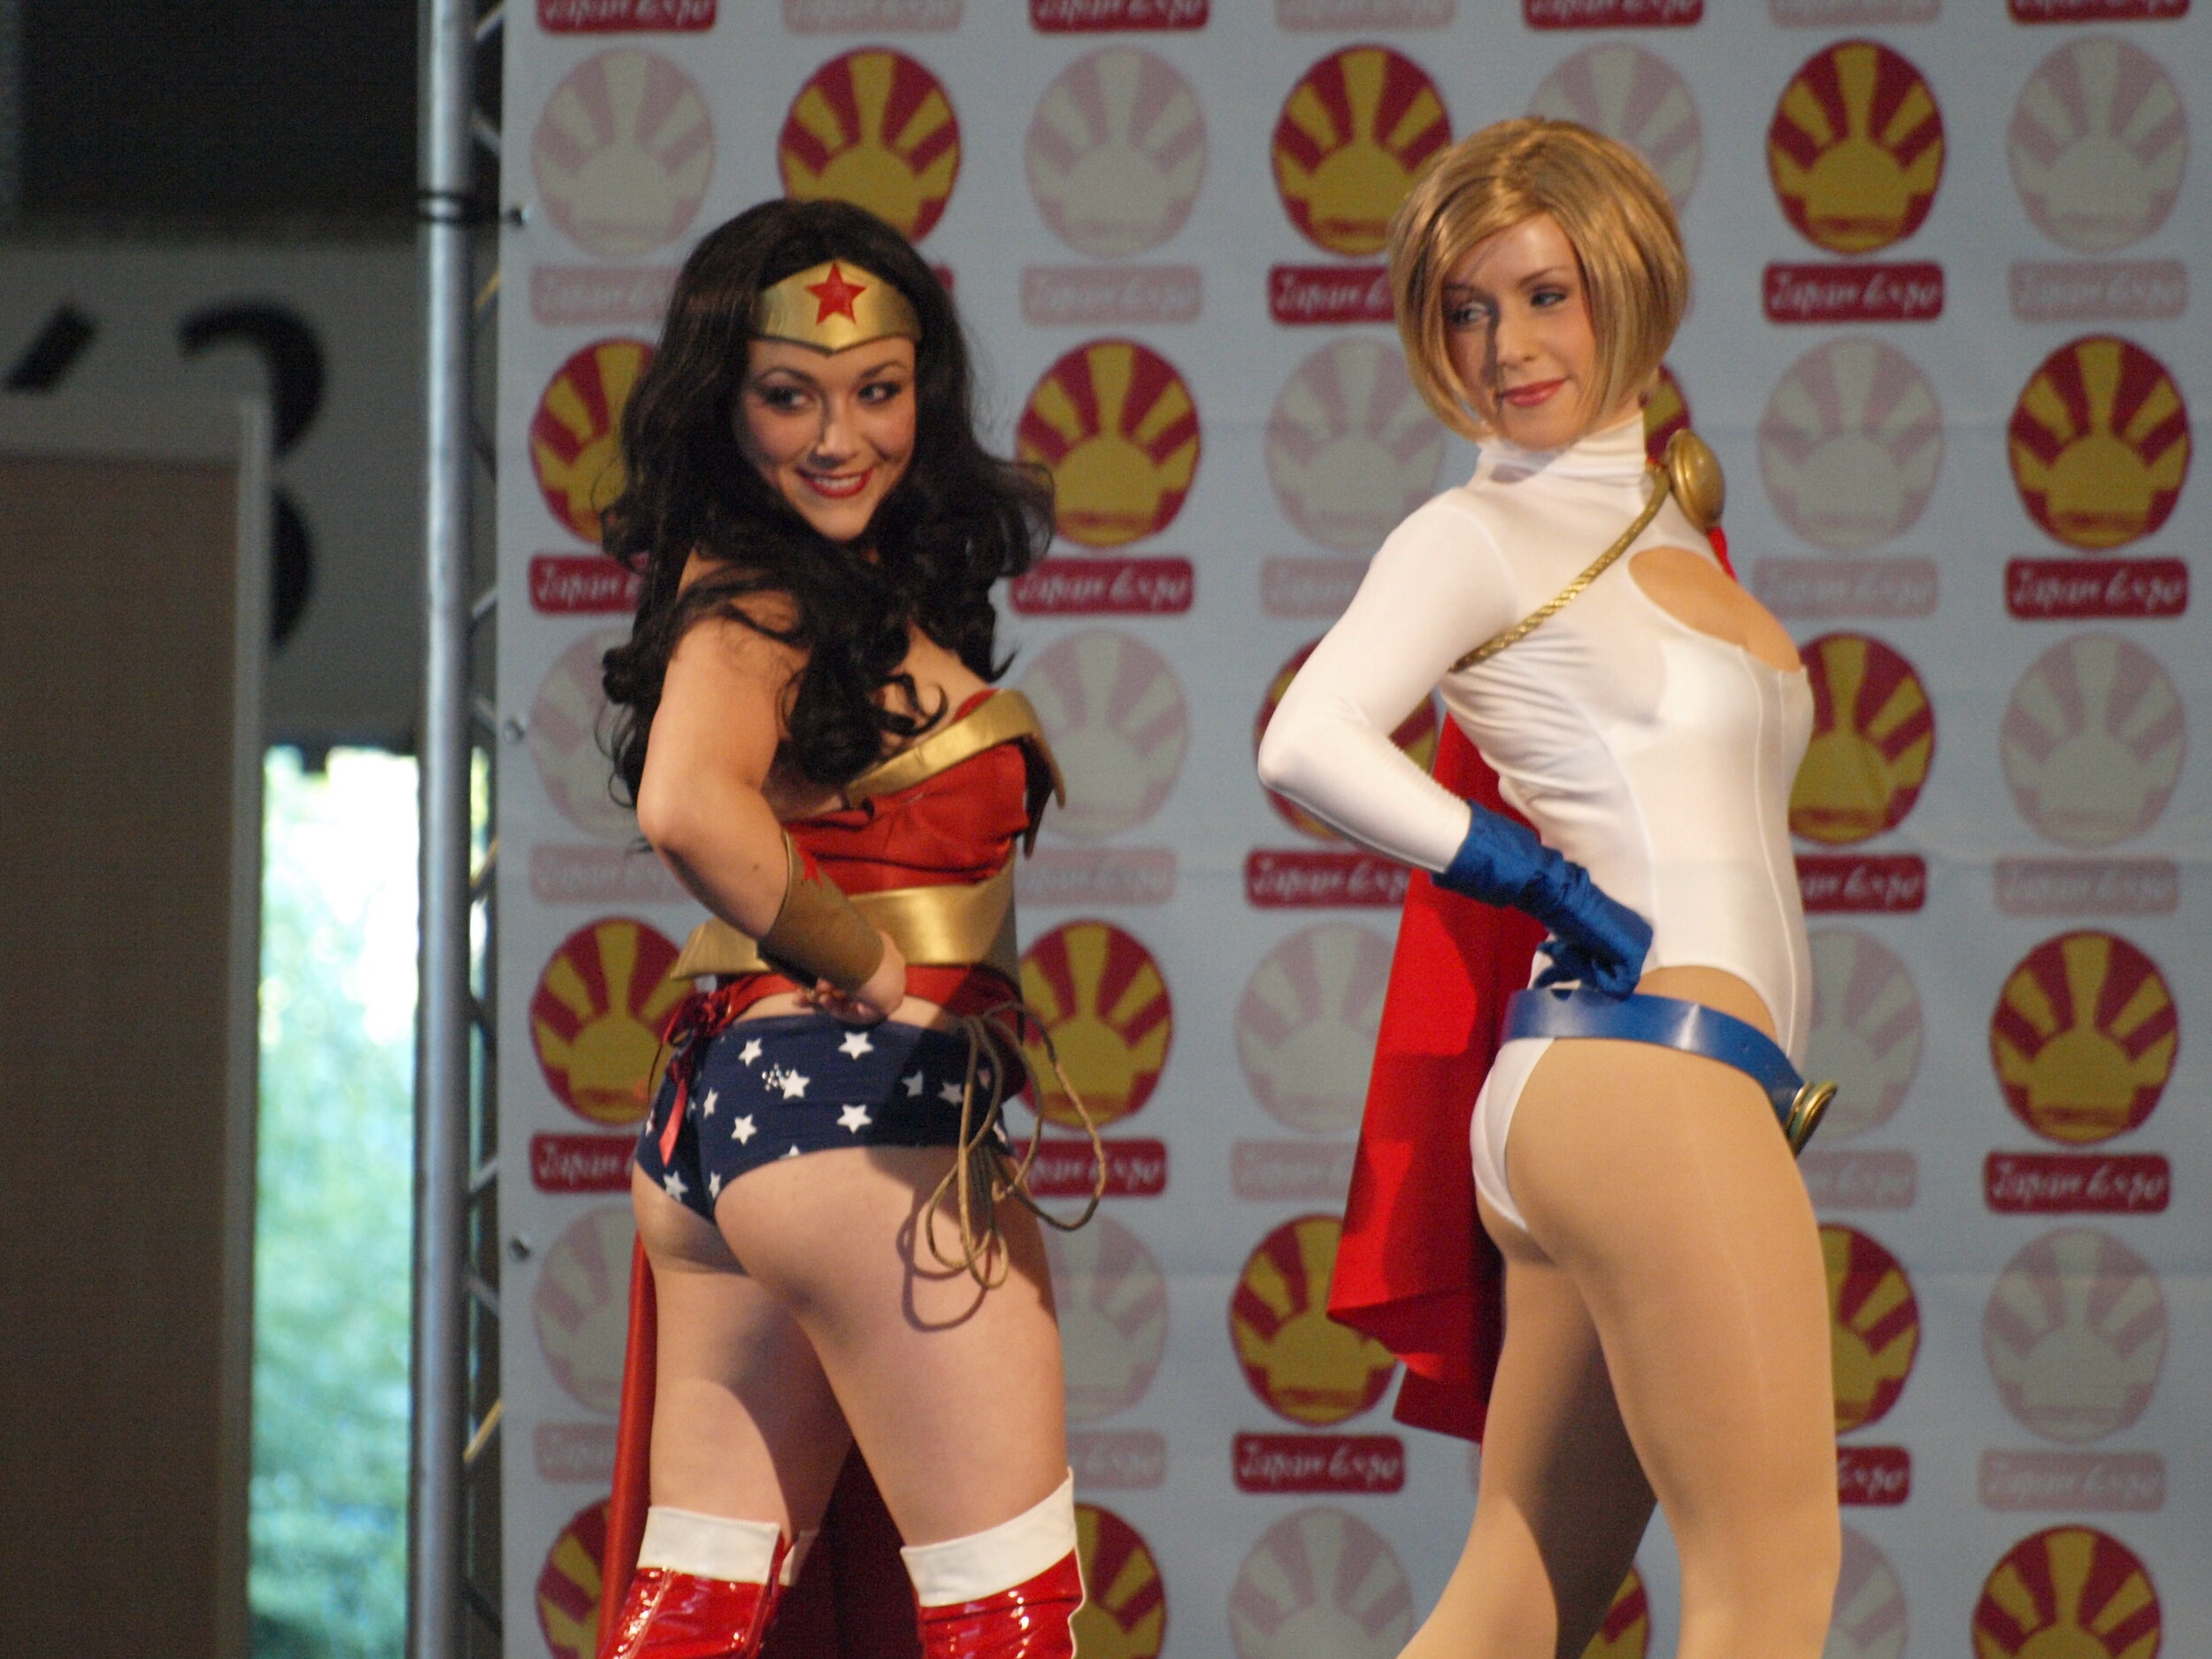 Wonder Woman et Power Girl sur scène.jpg